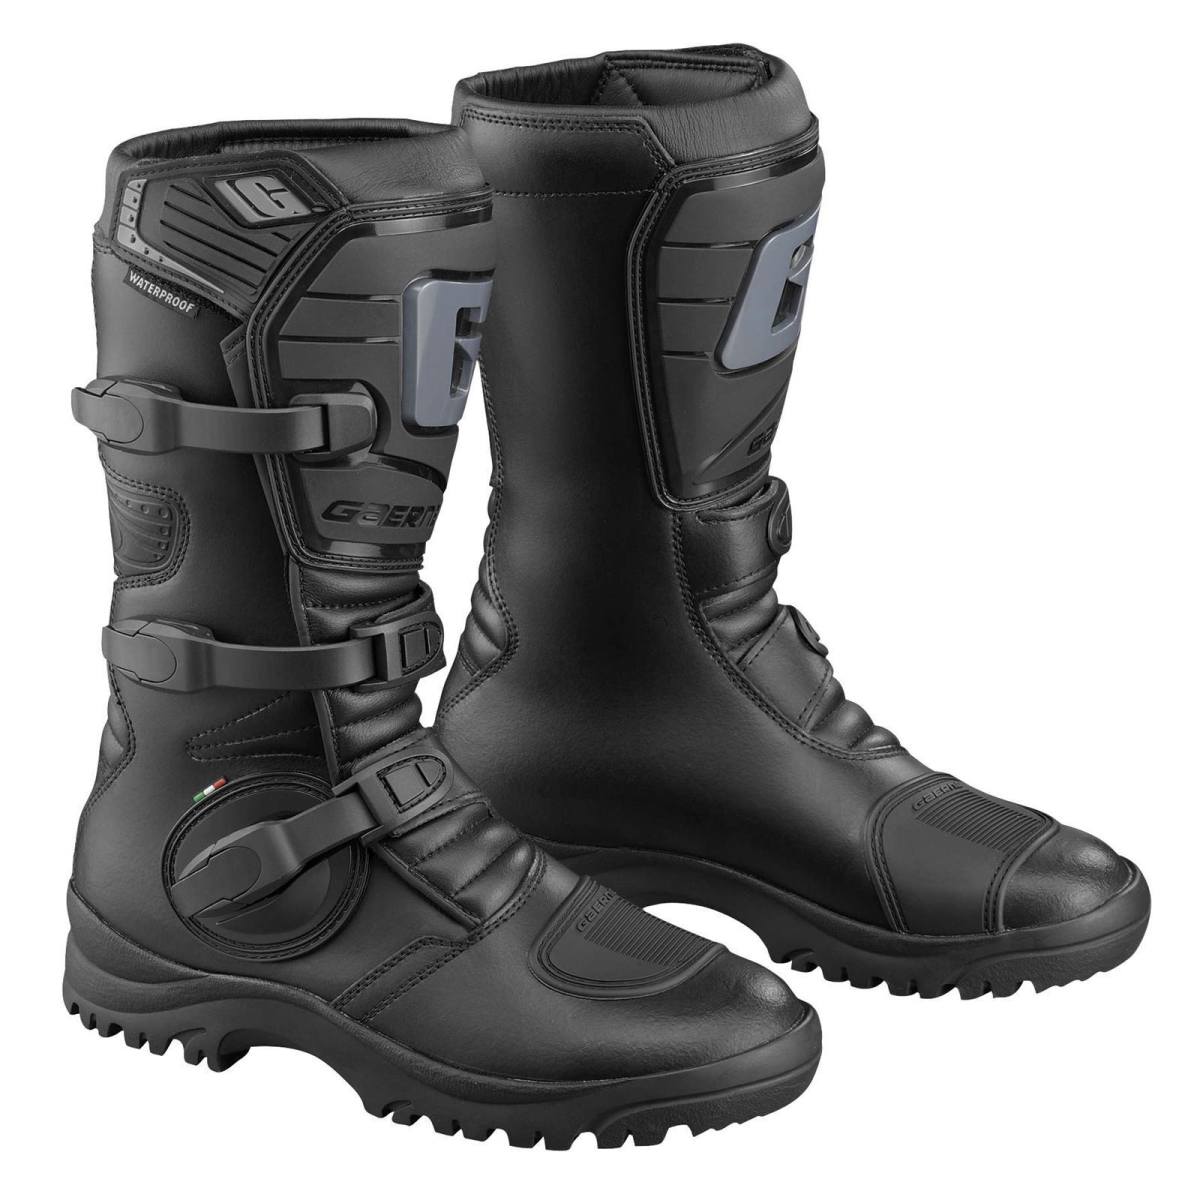 2525-001-10 G Adventure Riding Boot, Black - Size 10 -  Gaerne